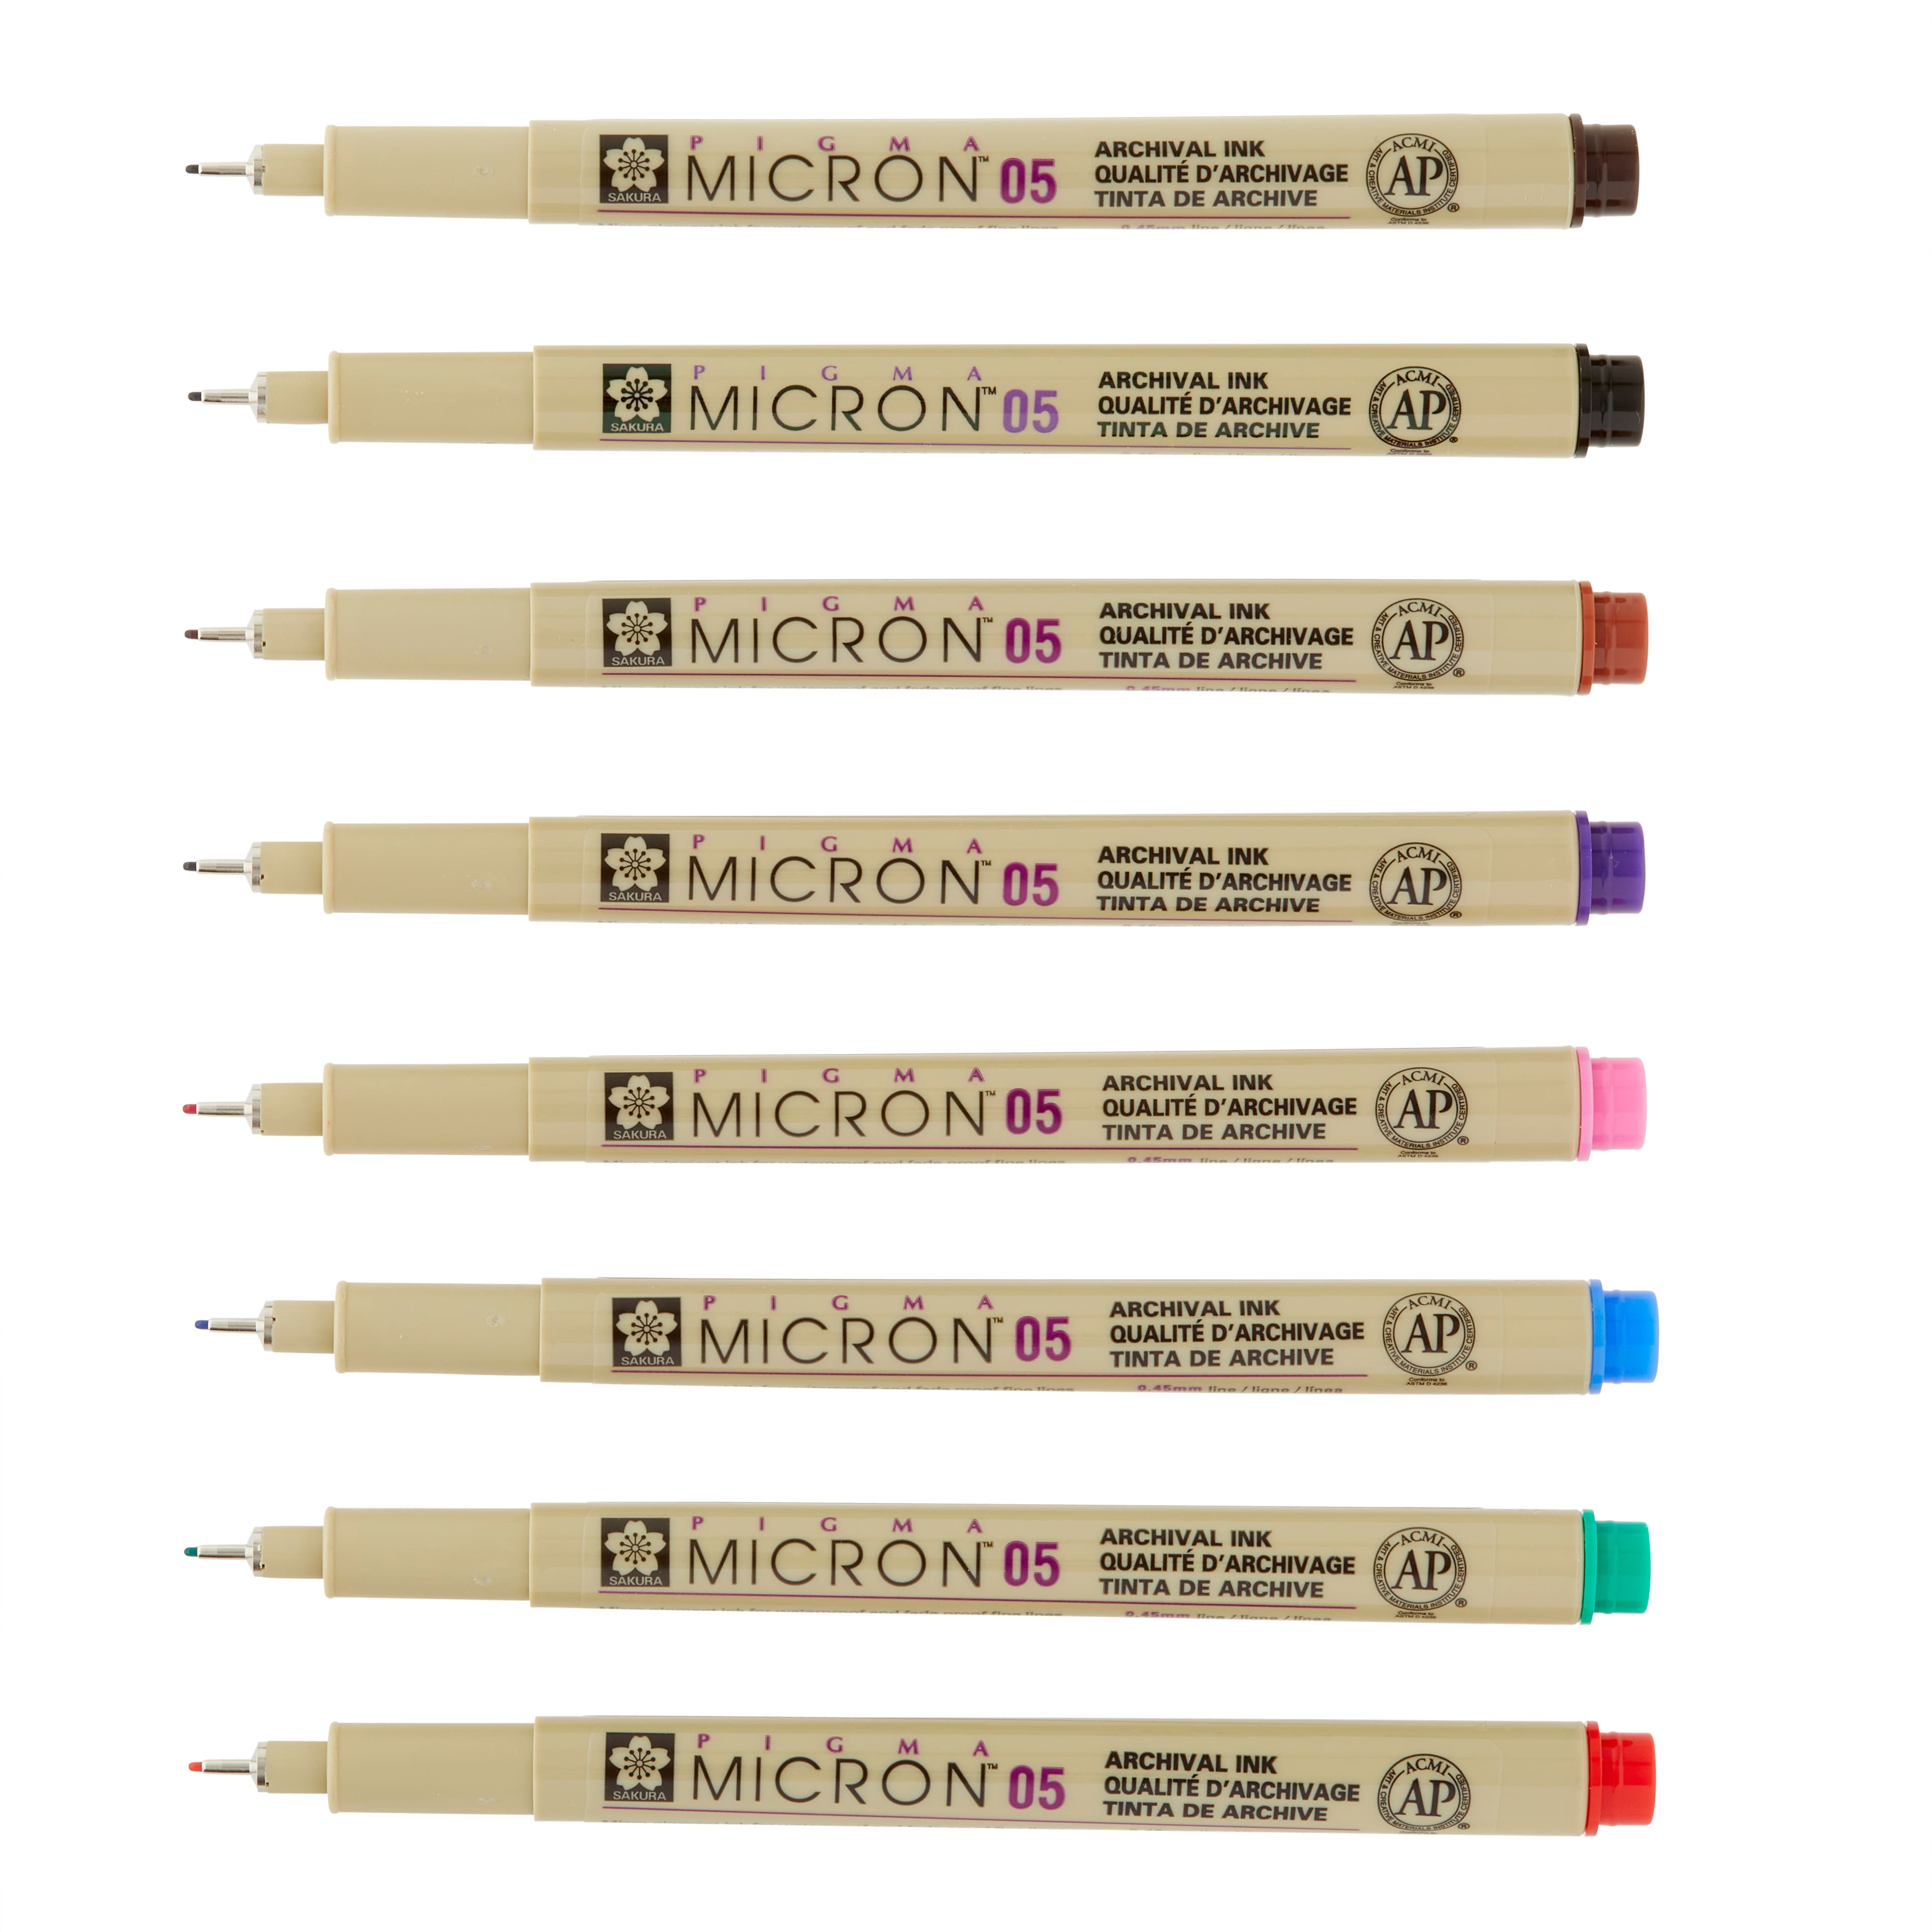 Pigma Micron Fine Line Design Pen, 0.25 mm - 8 pack